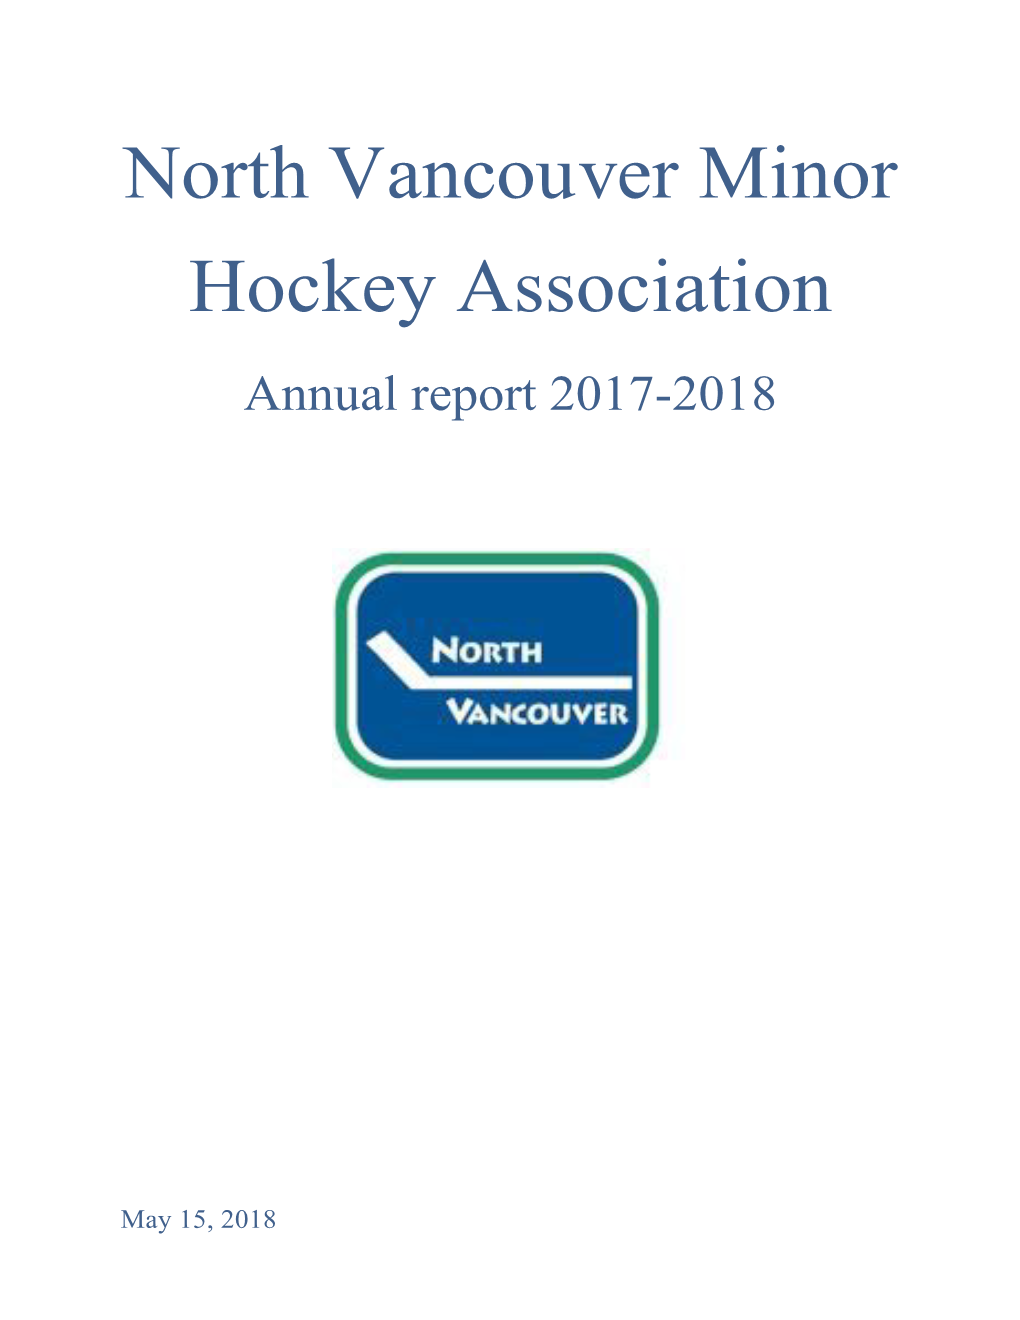 North Vancouver Minor Hockey Association Annual Report 2017-2018